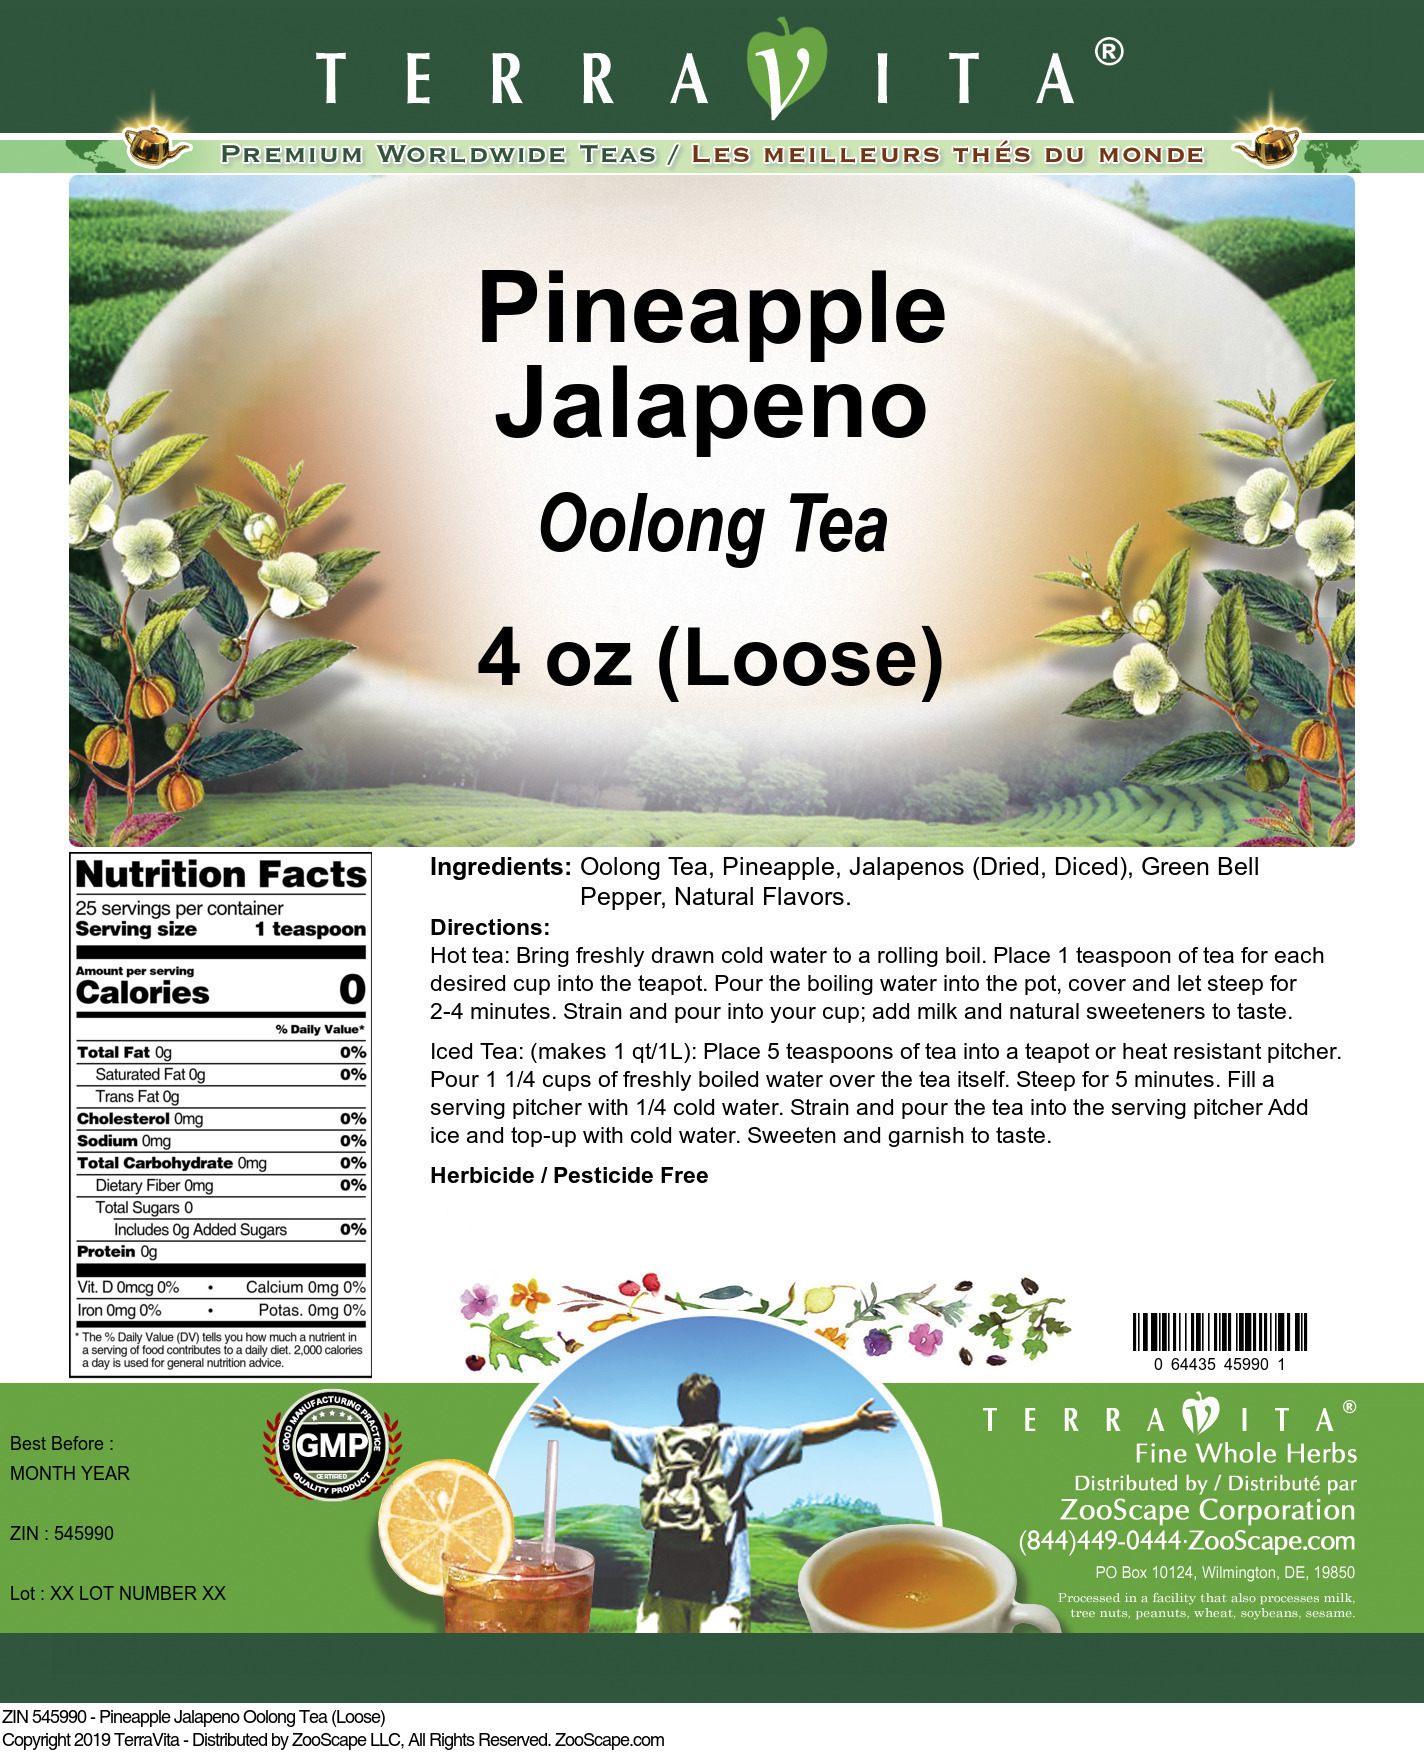 Pineapple Jalapeno Oolong Tea (Loose) - Label